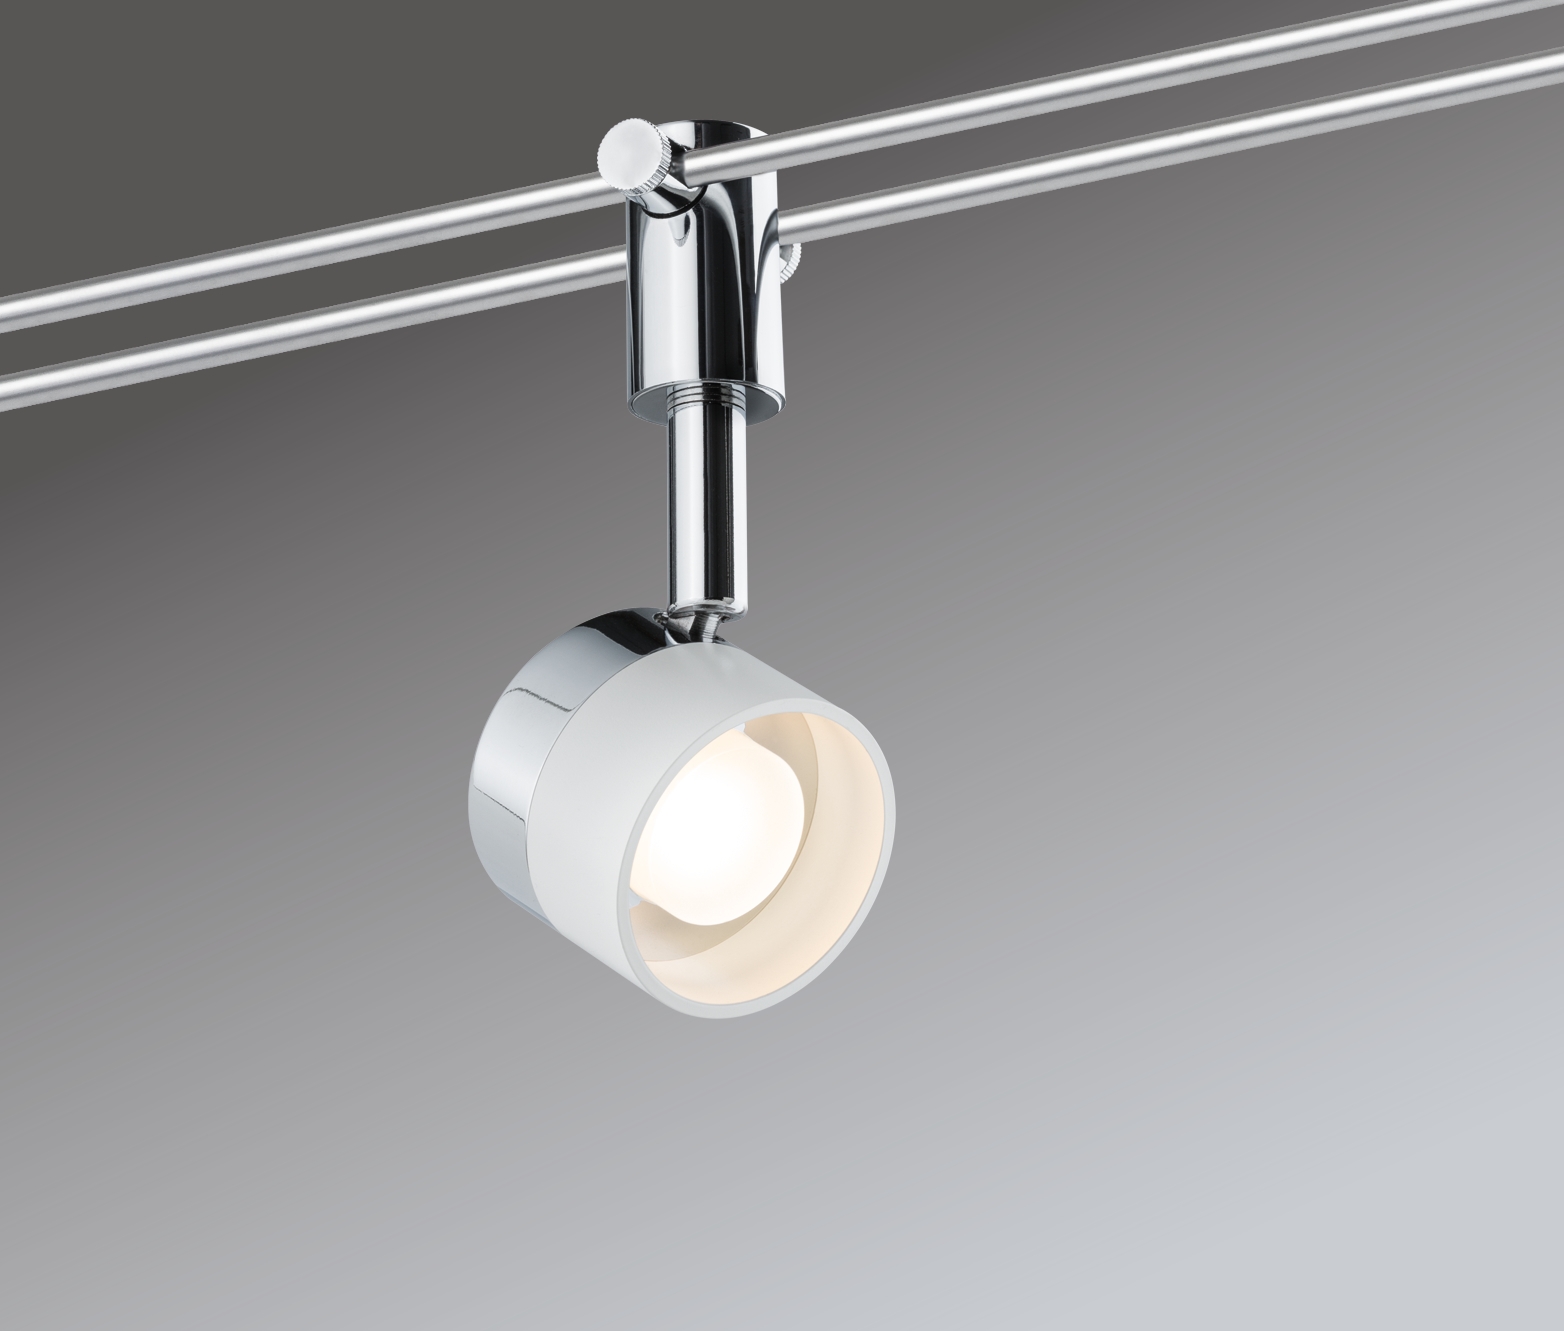 Four Lamp LED Track Lighting System